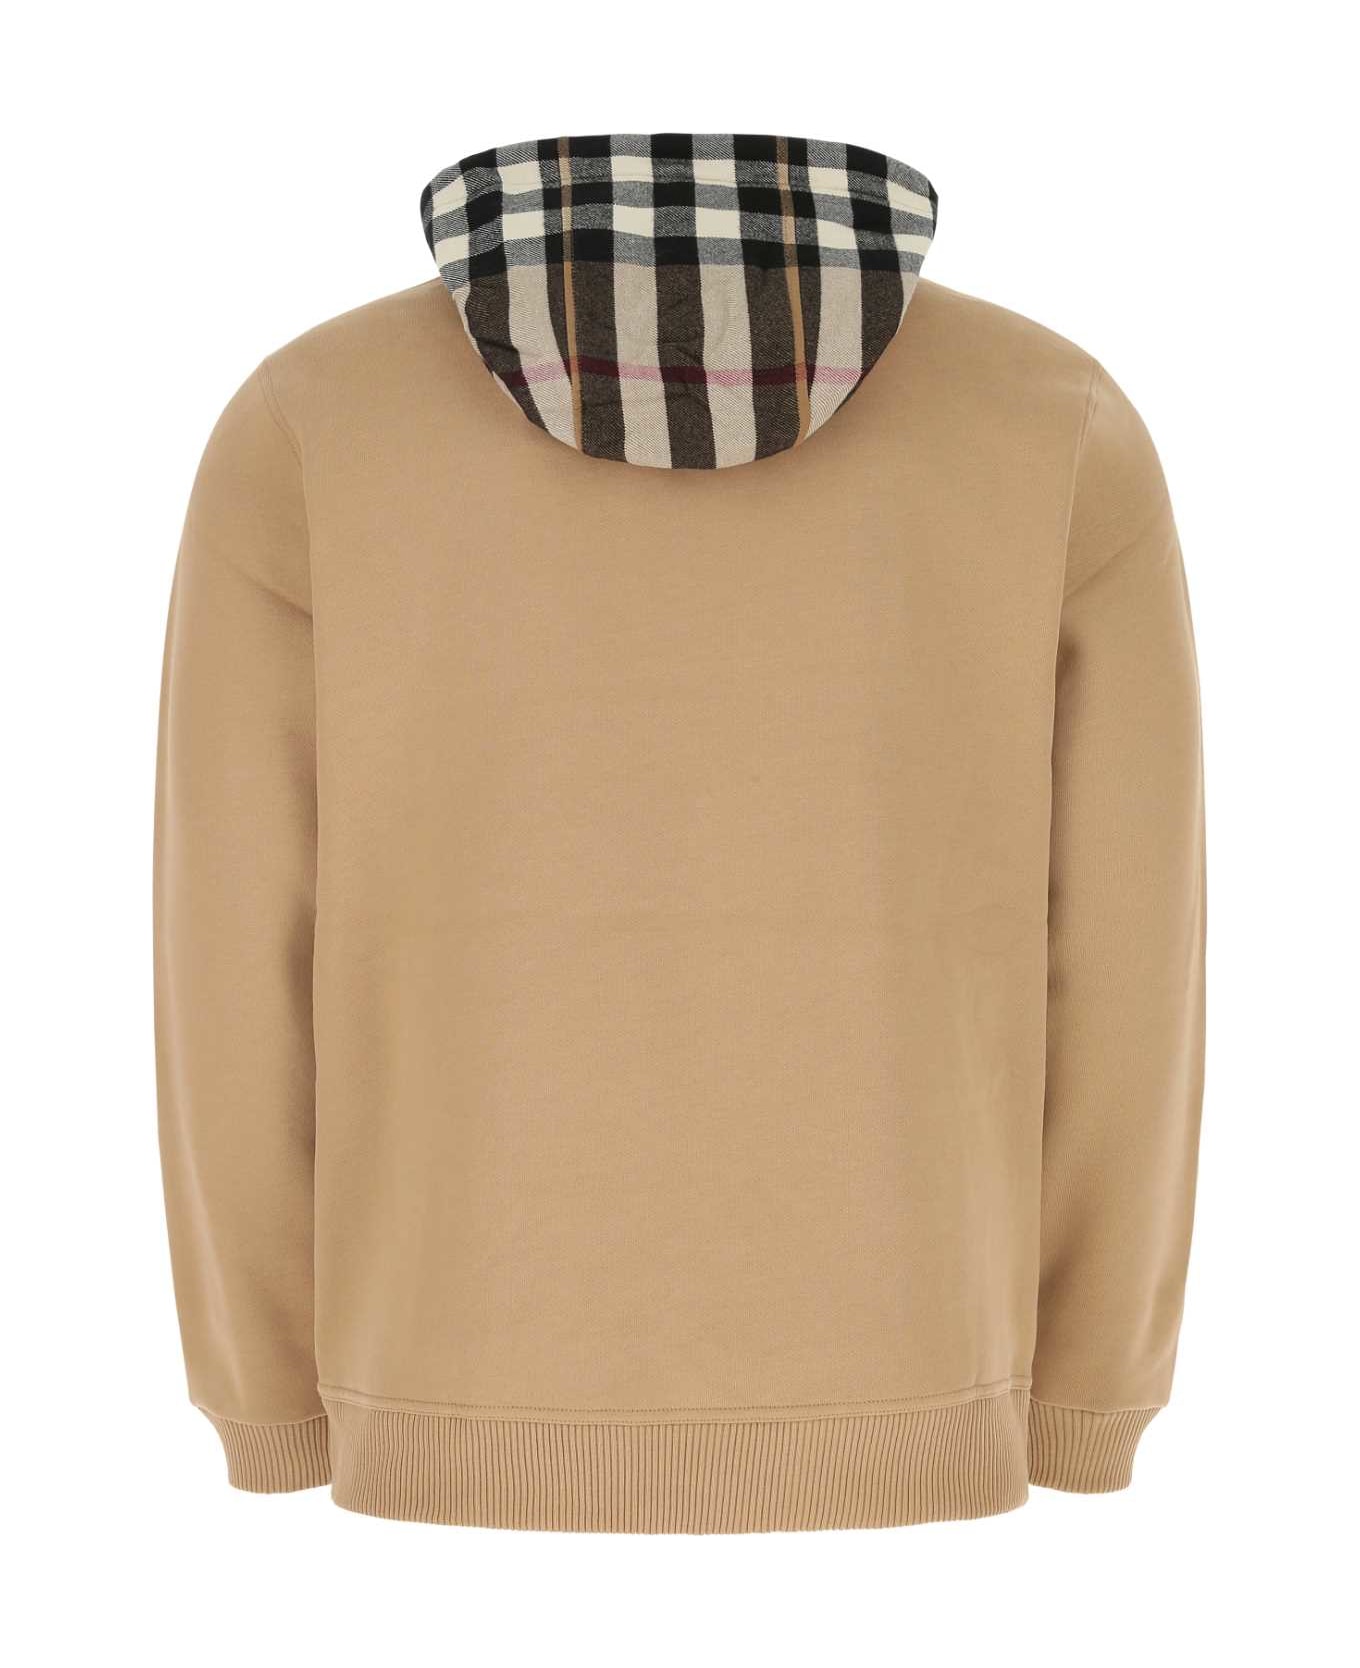 Burberry Beige Cotton Blend Sweatshirt - A1420